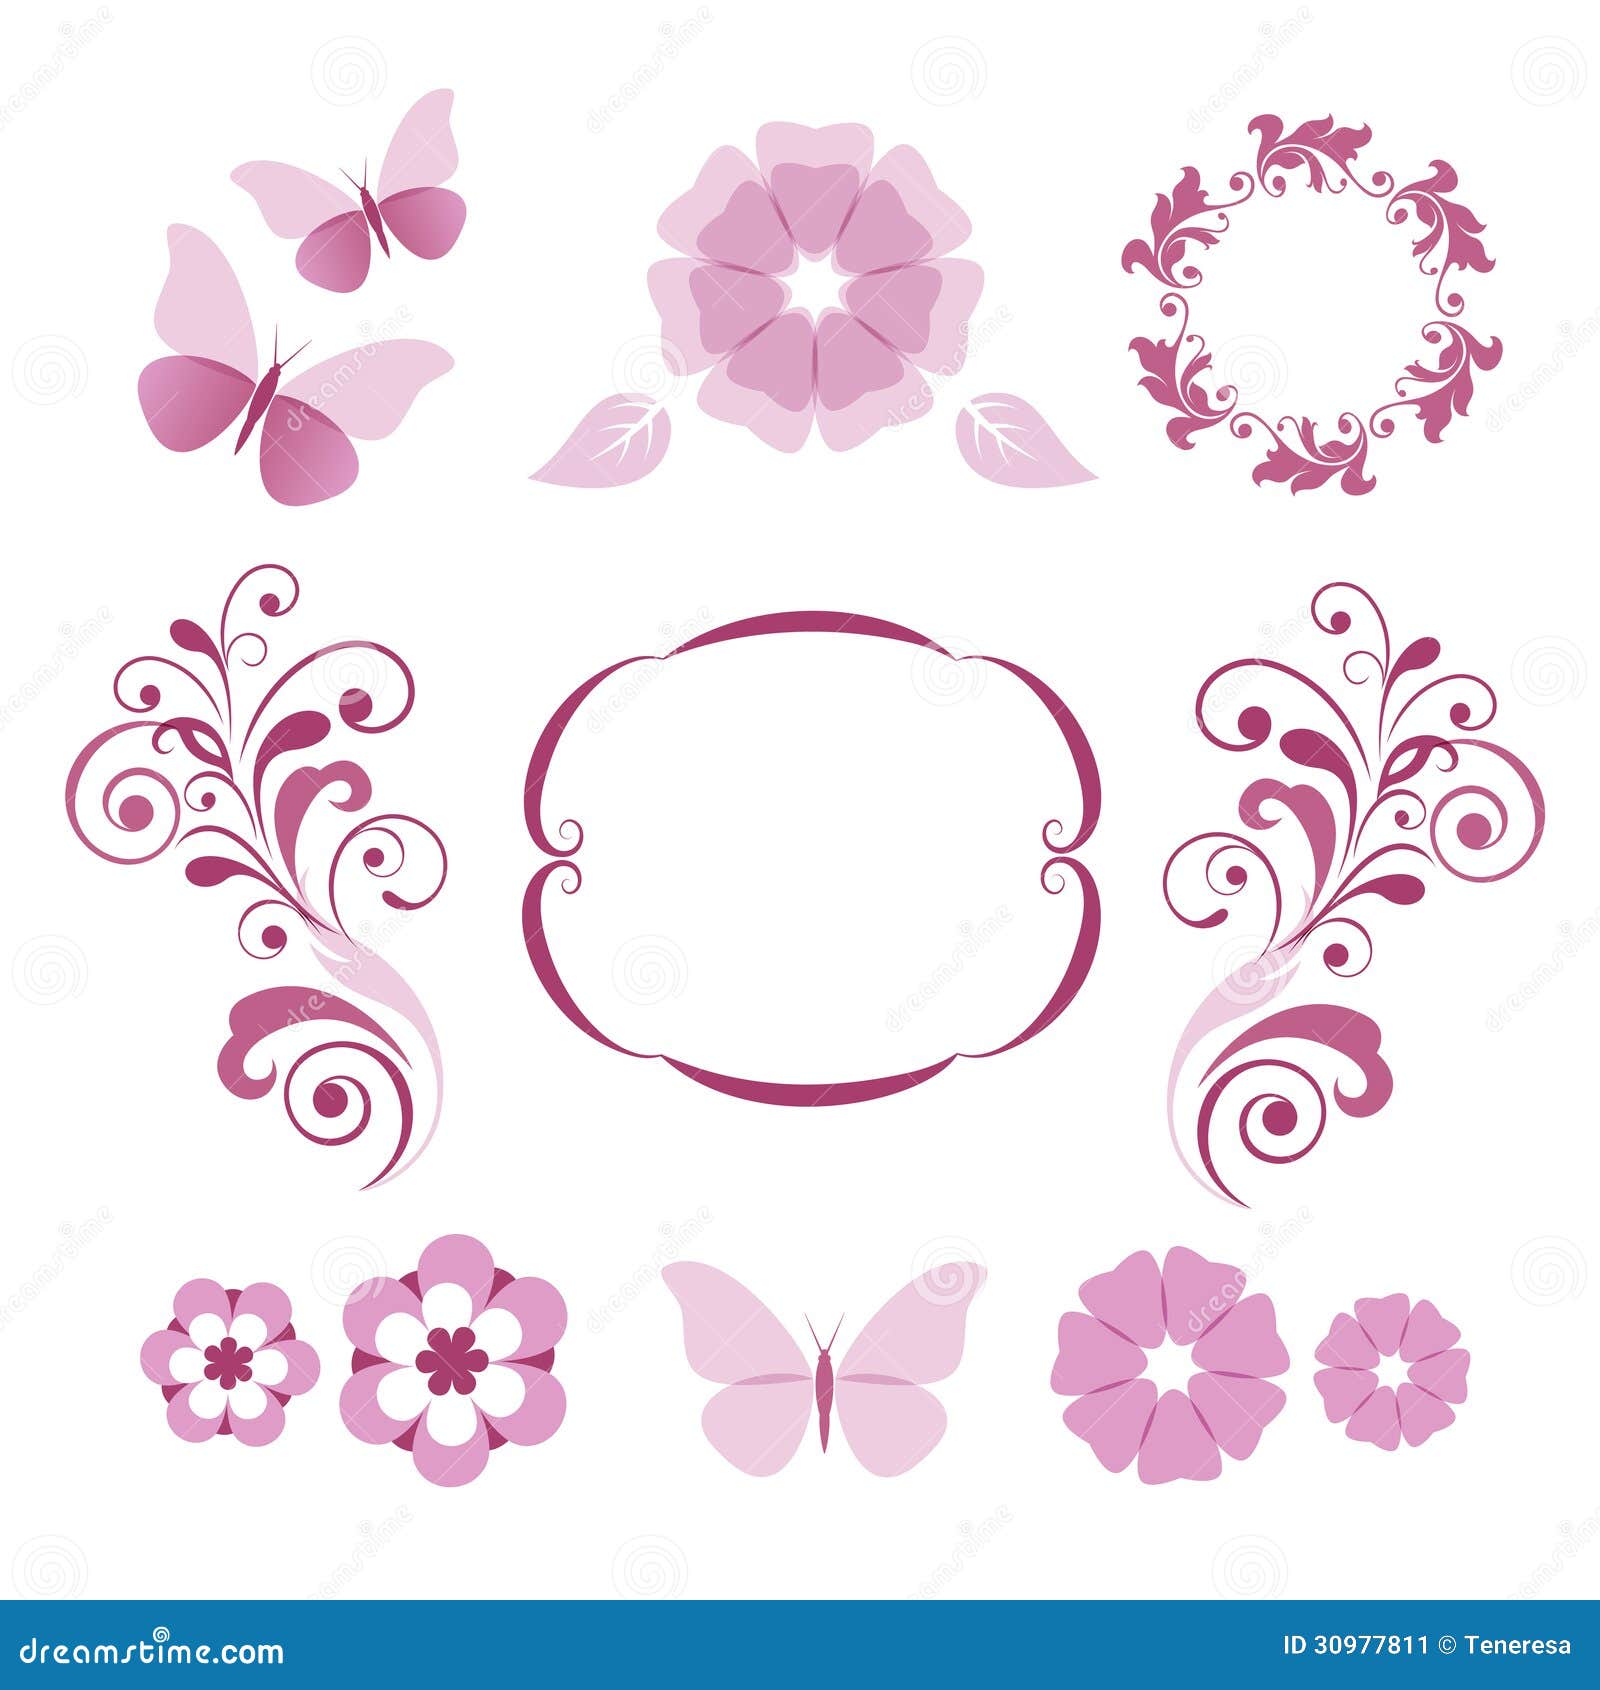 Download Floral Decorative Elements Stock Image - Image: 30977811